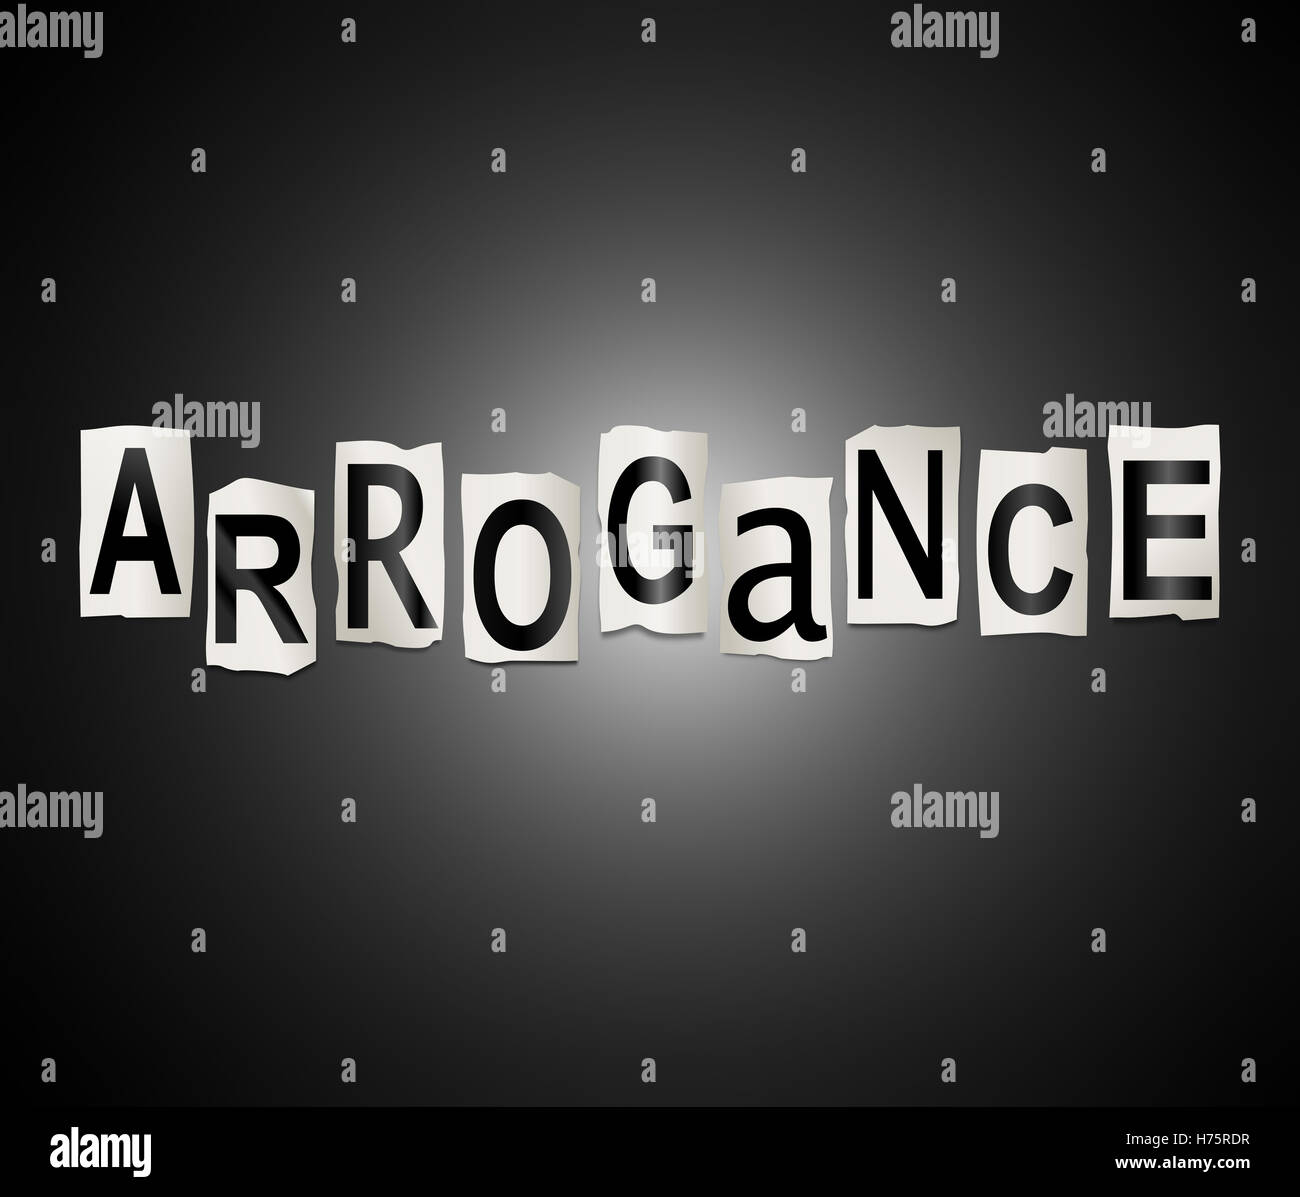 Arrogance. Stock Photo